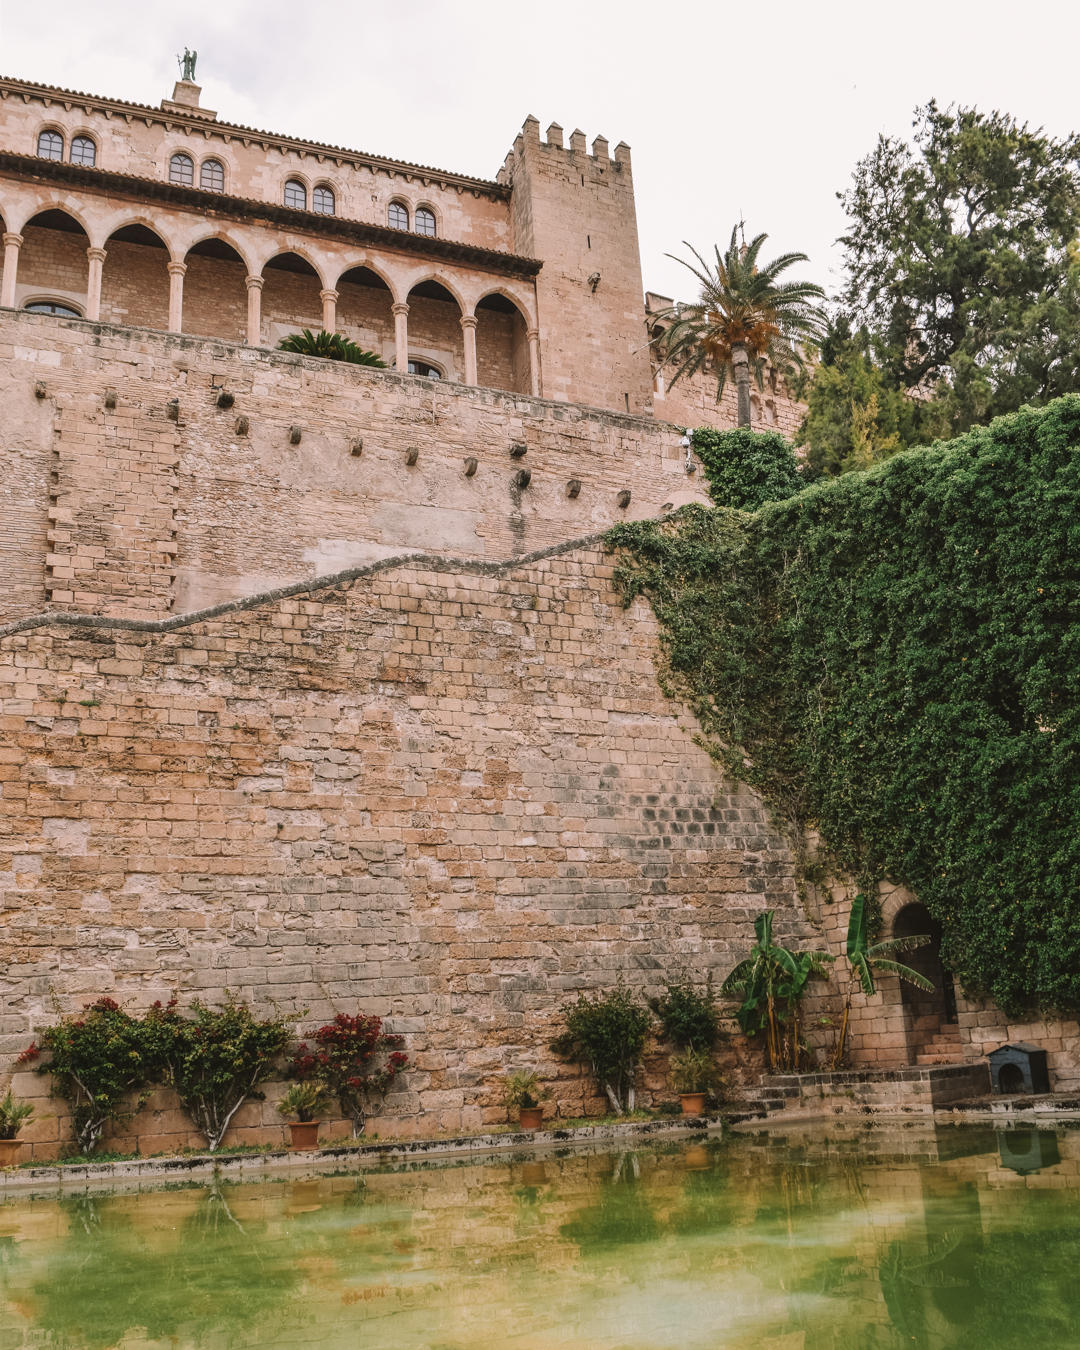 Visit The Royal Palace of La Almudaina in Palma, Mallorca